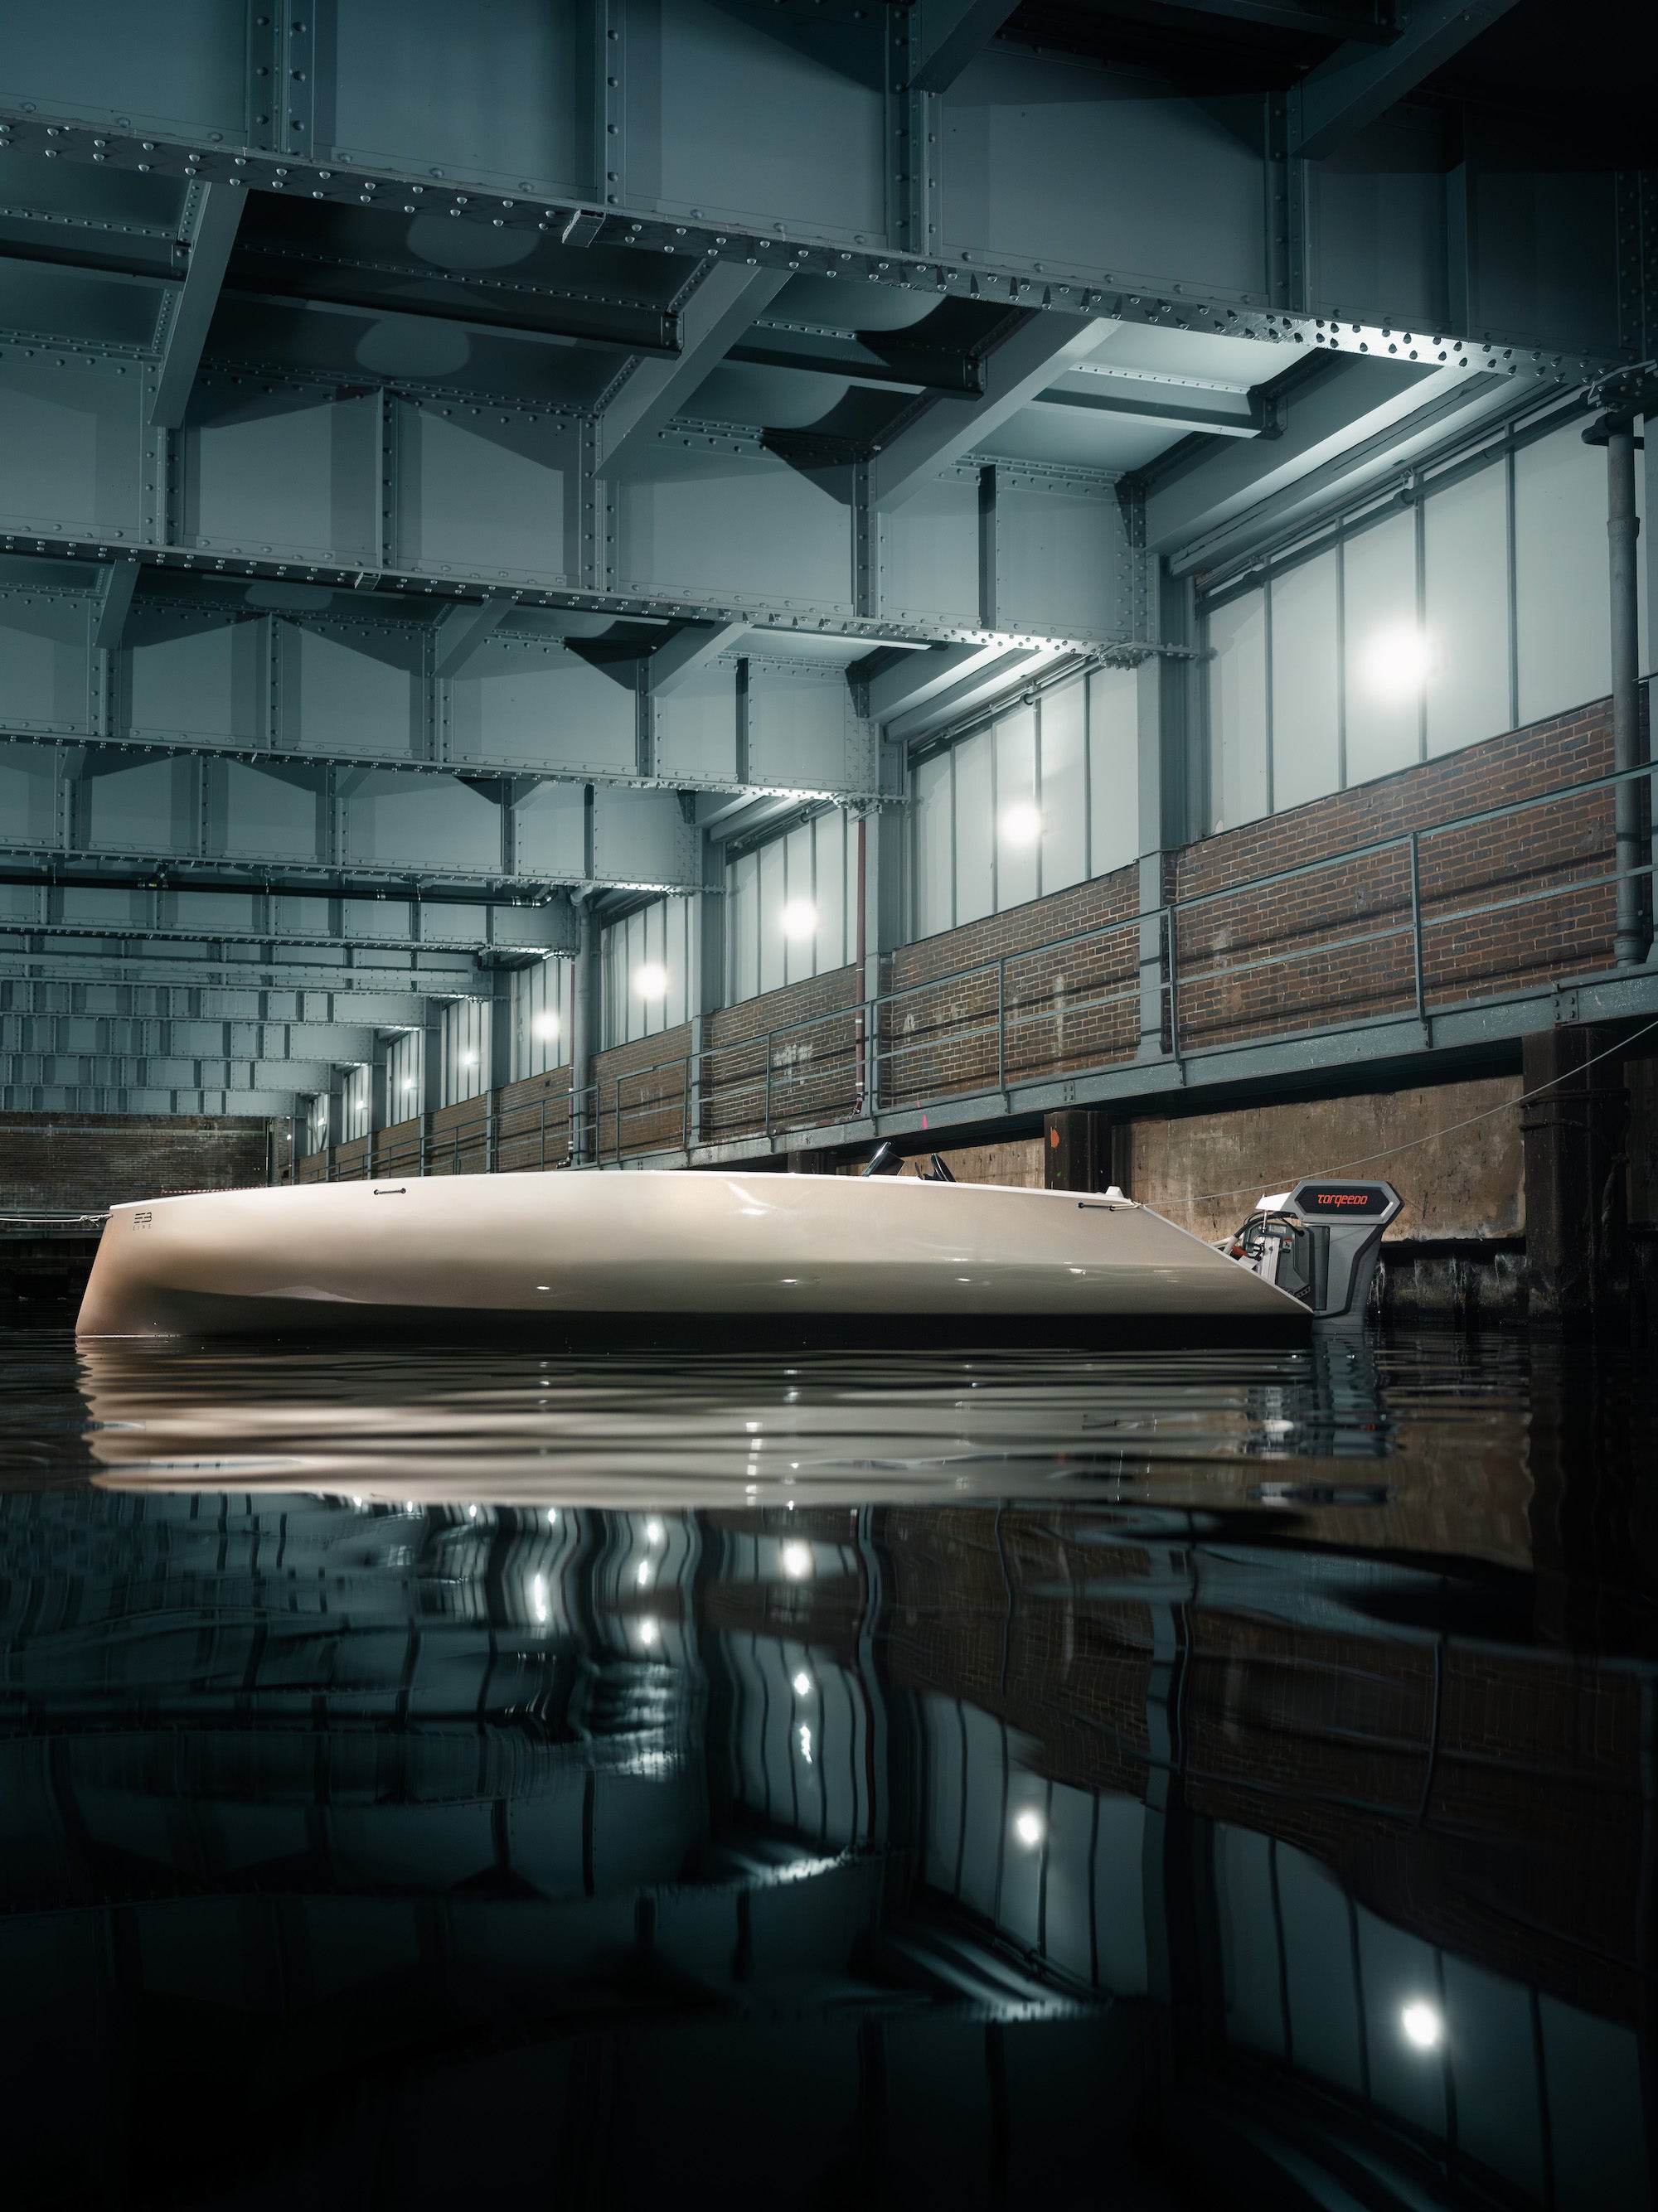 Boat inside a dark, lightly lit boat hangar